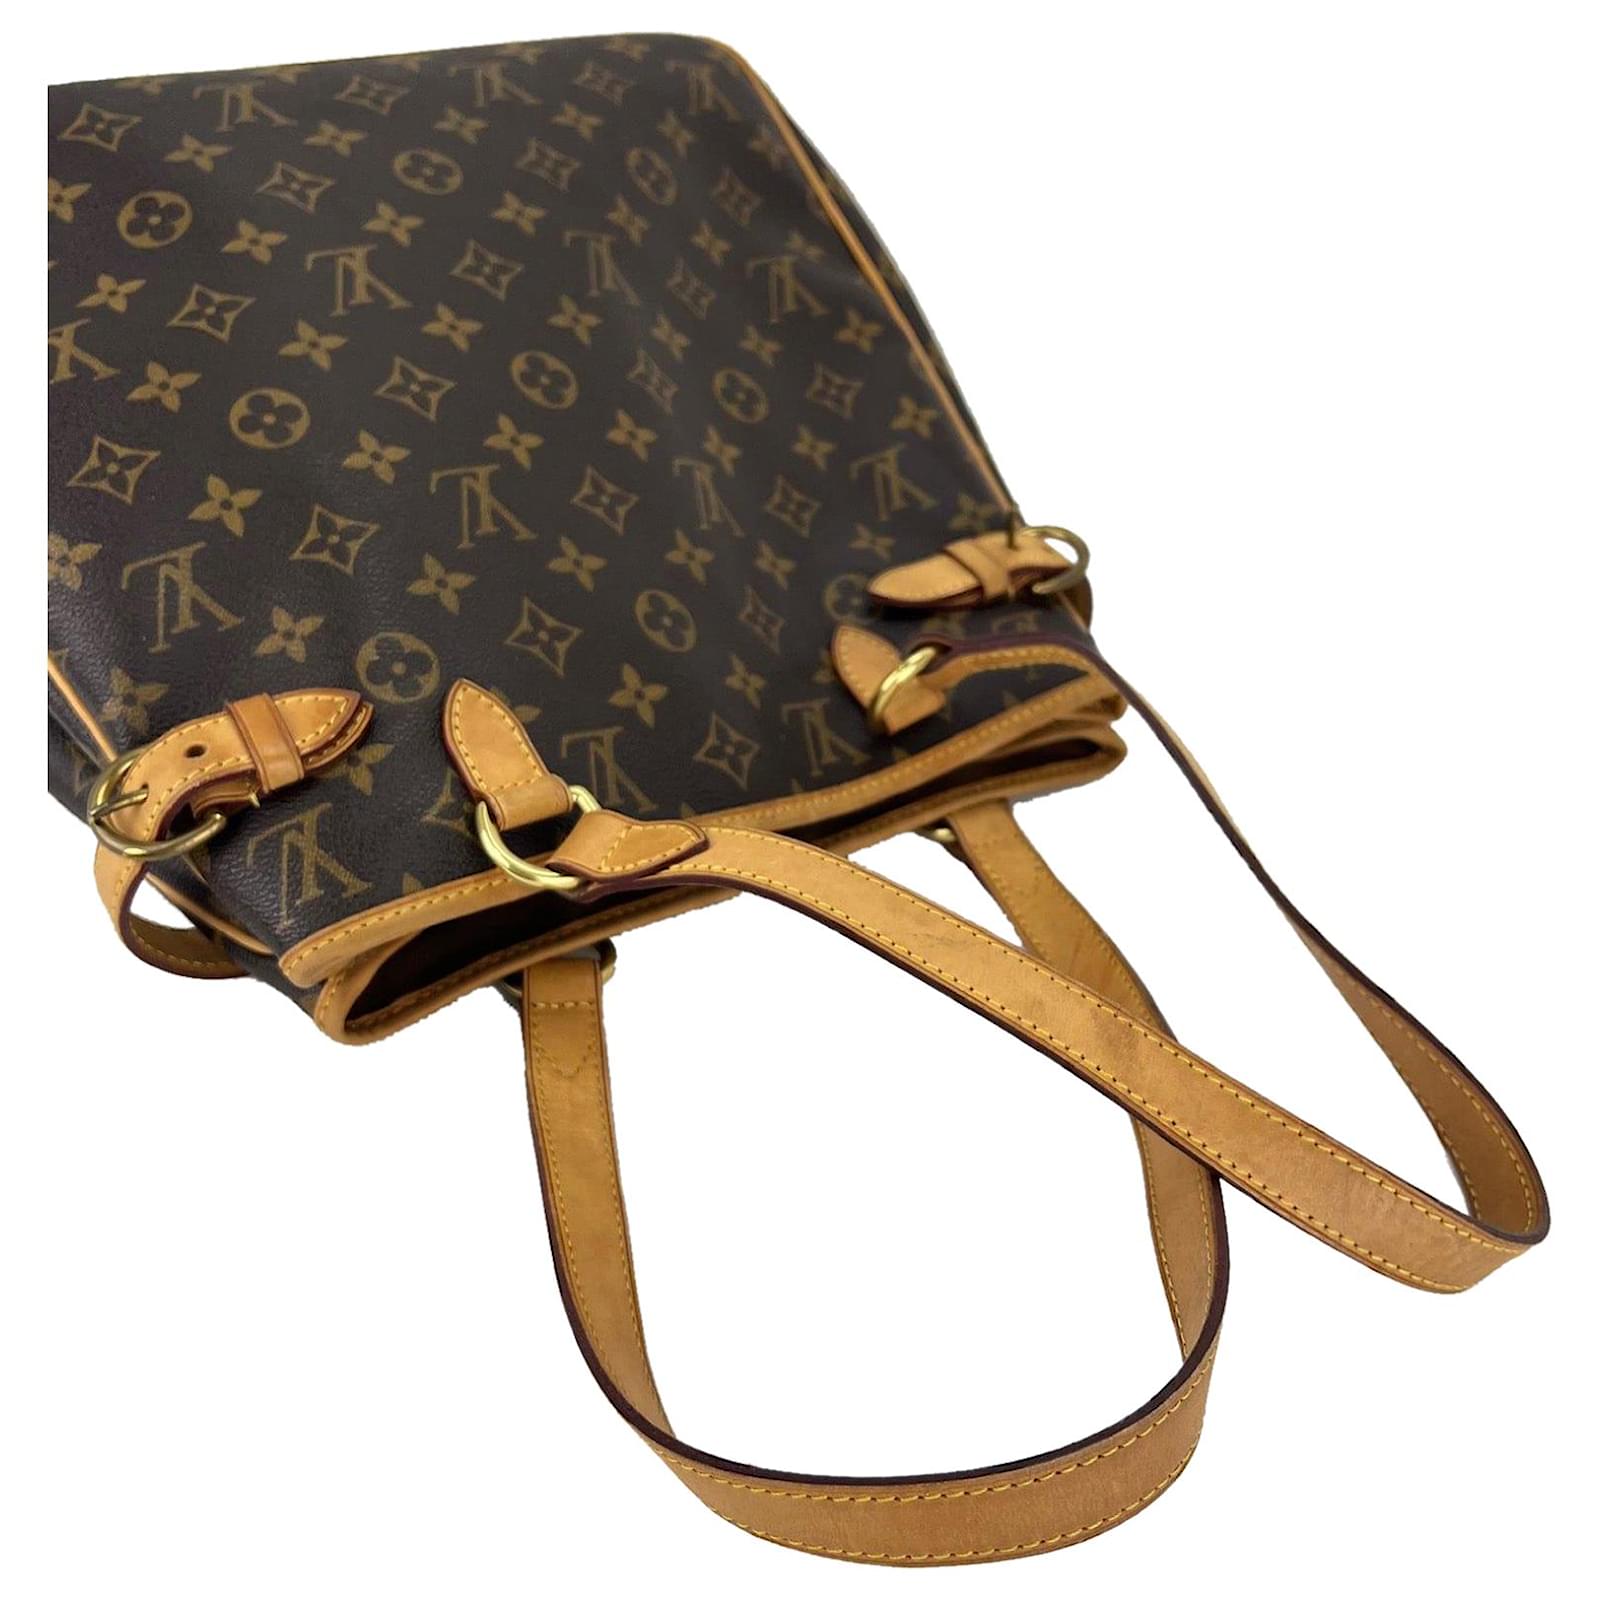 Louis Vuitton Pre-Loved Florine Monogram handbag for Women - Brown